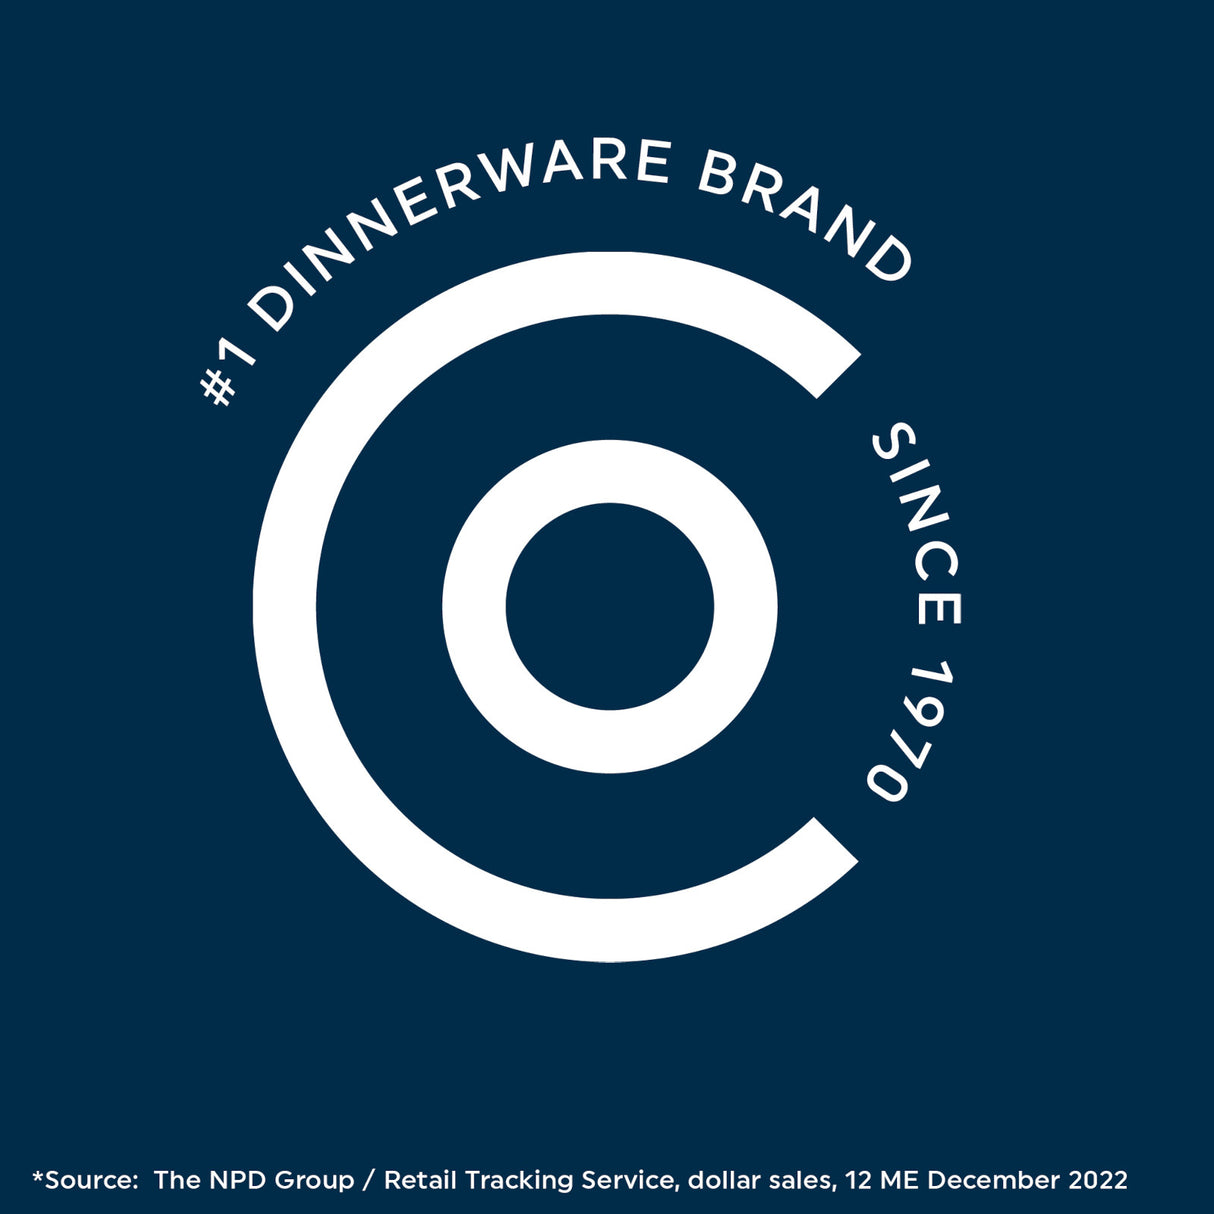 Text: Corelle #1 Dinnerware Brand Since 1970